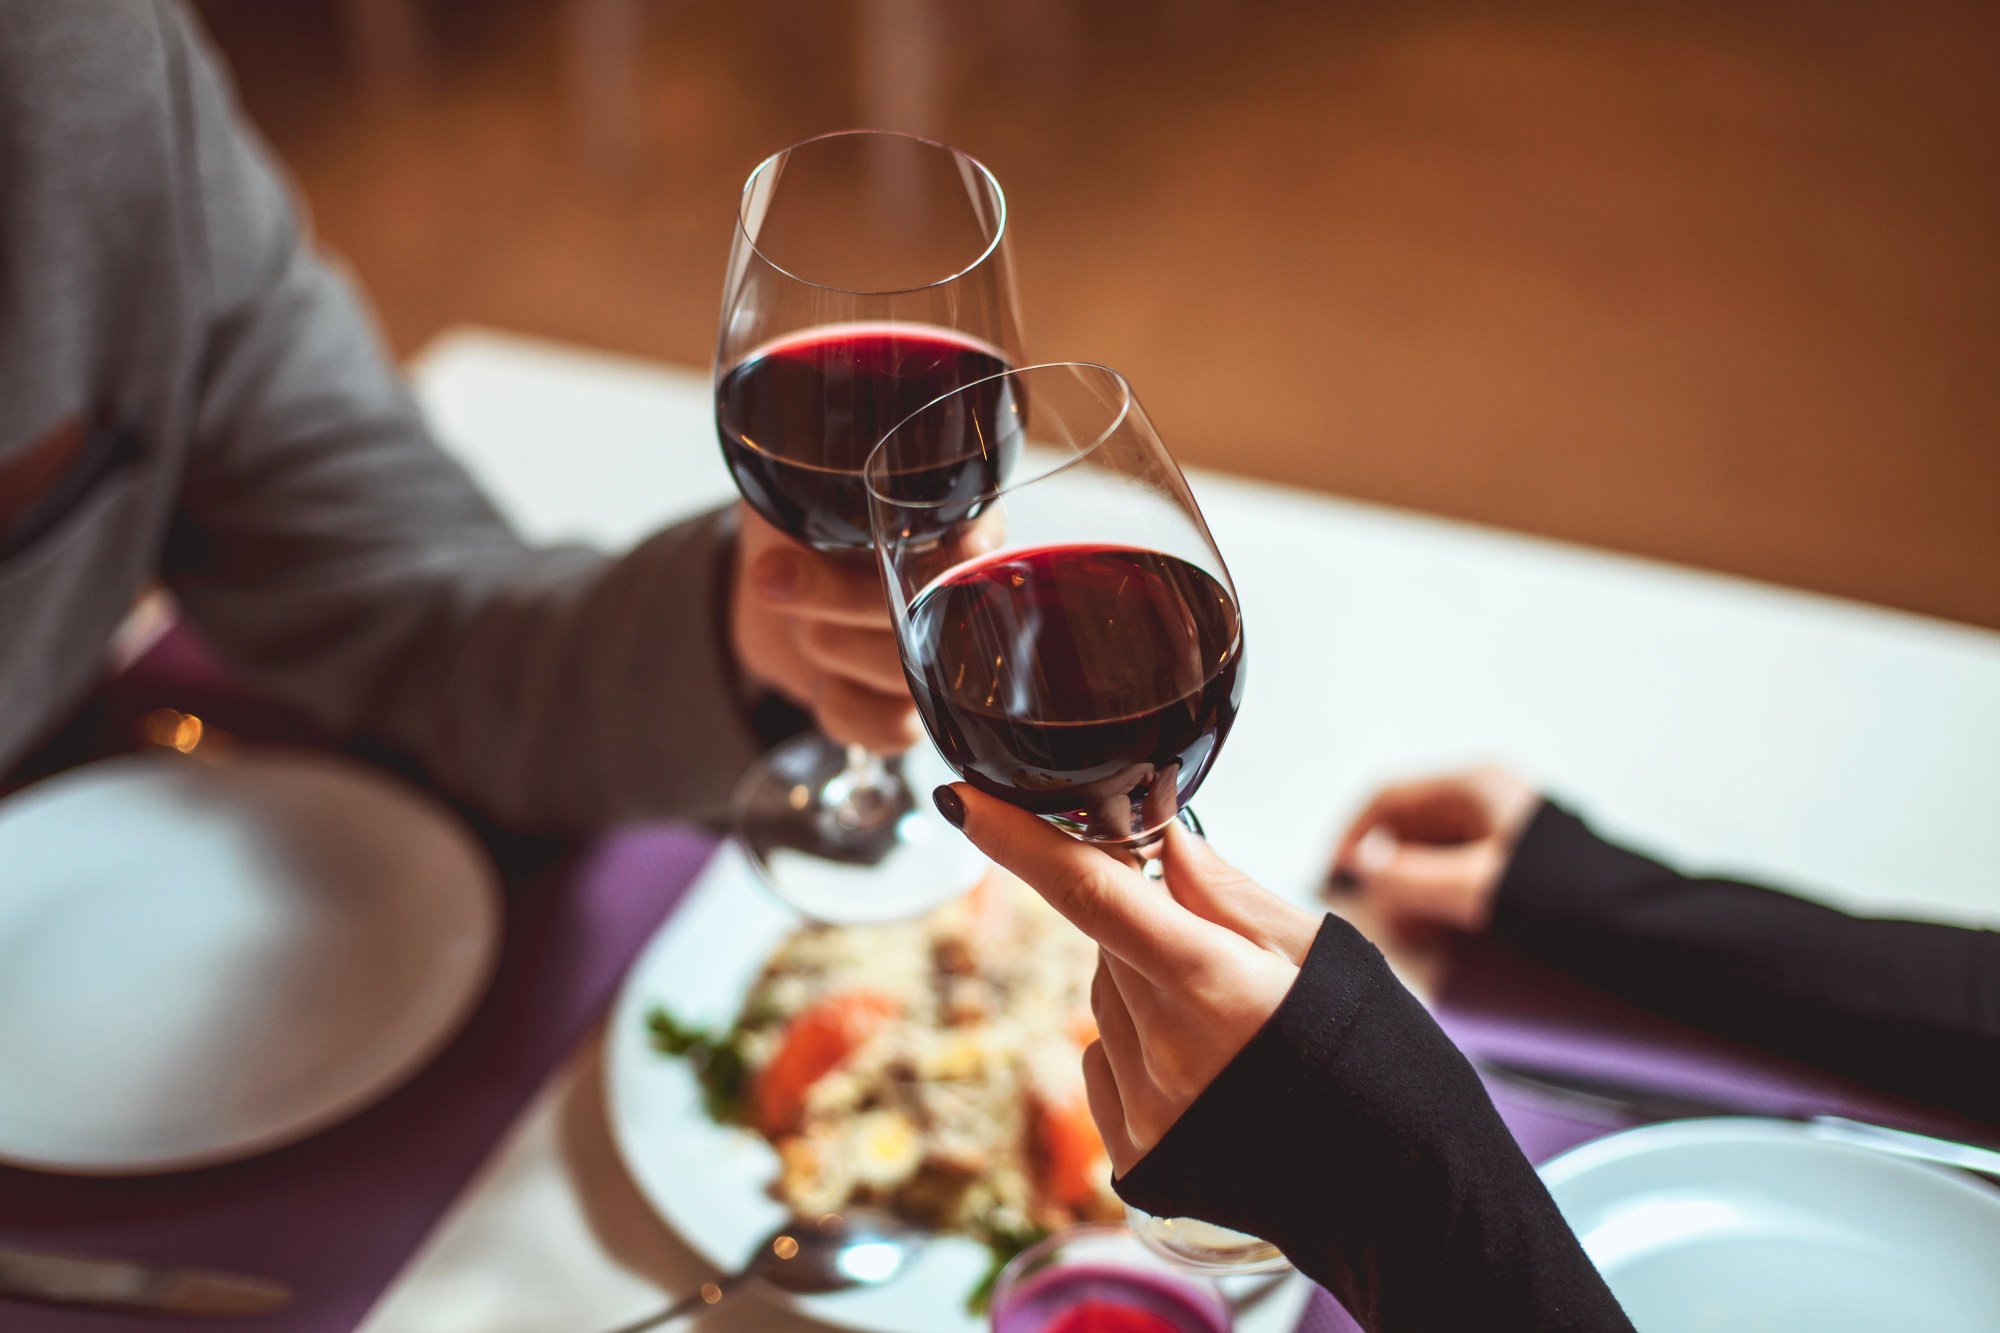 Где попить вино. Бокал вина. Бокал вина на столе в ресторане. Бокал красного вина. Романтический ужин в ресторане.